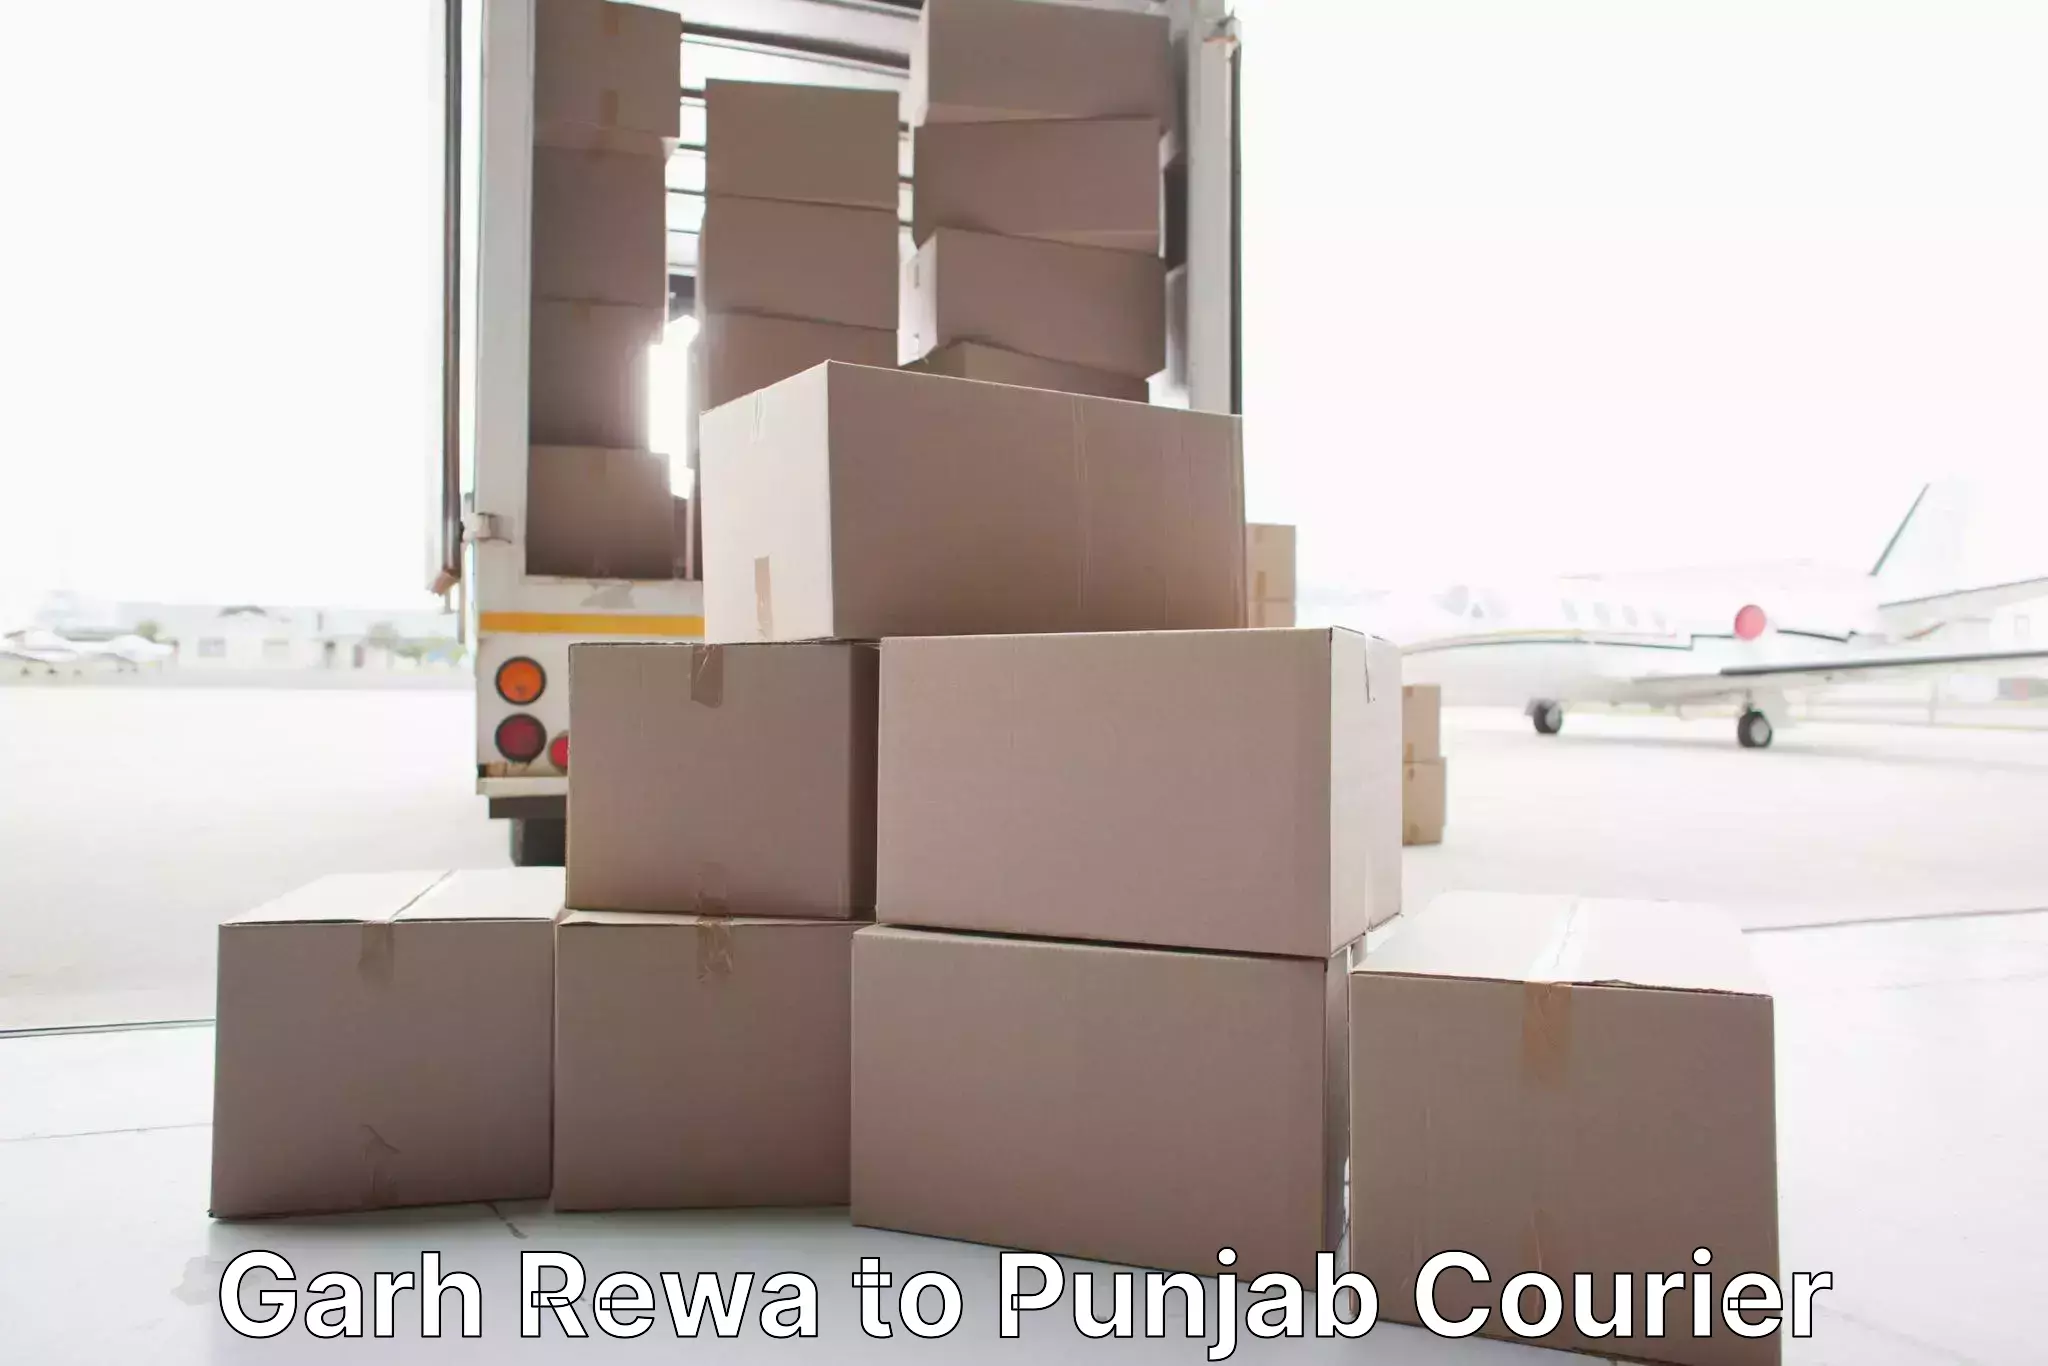 Professional moving company Garh Rewa to Nabha